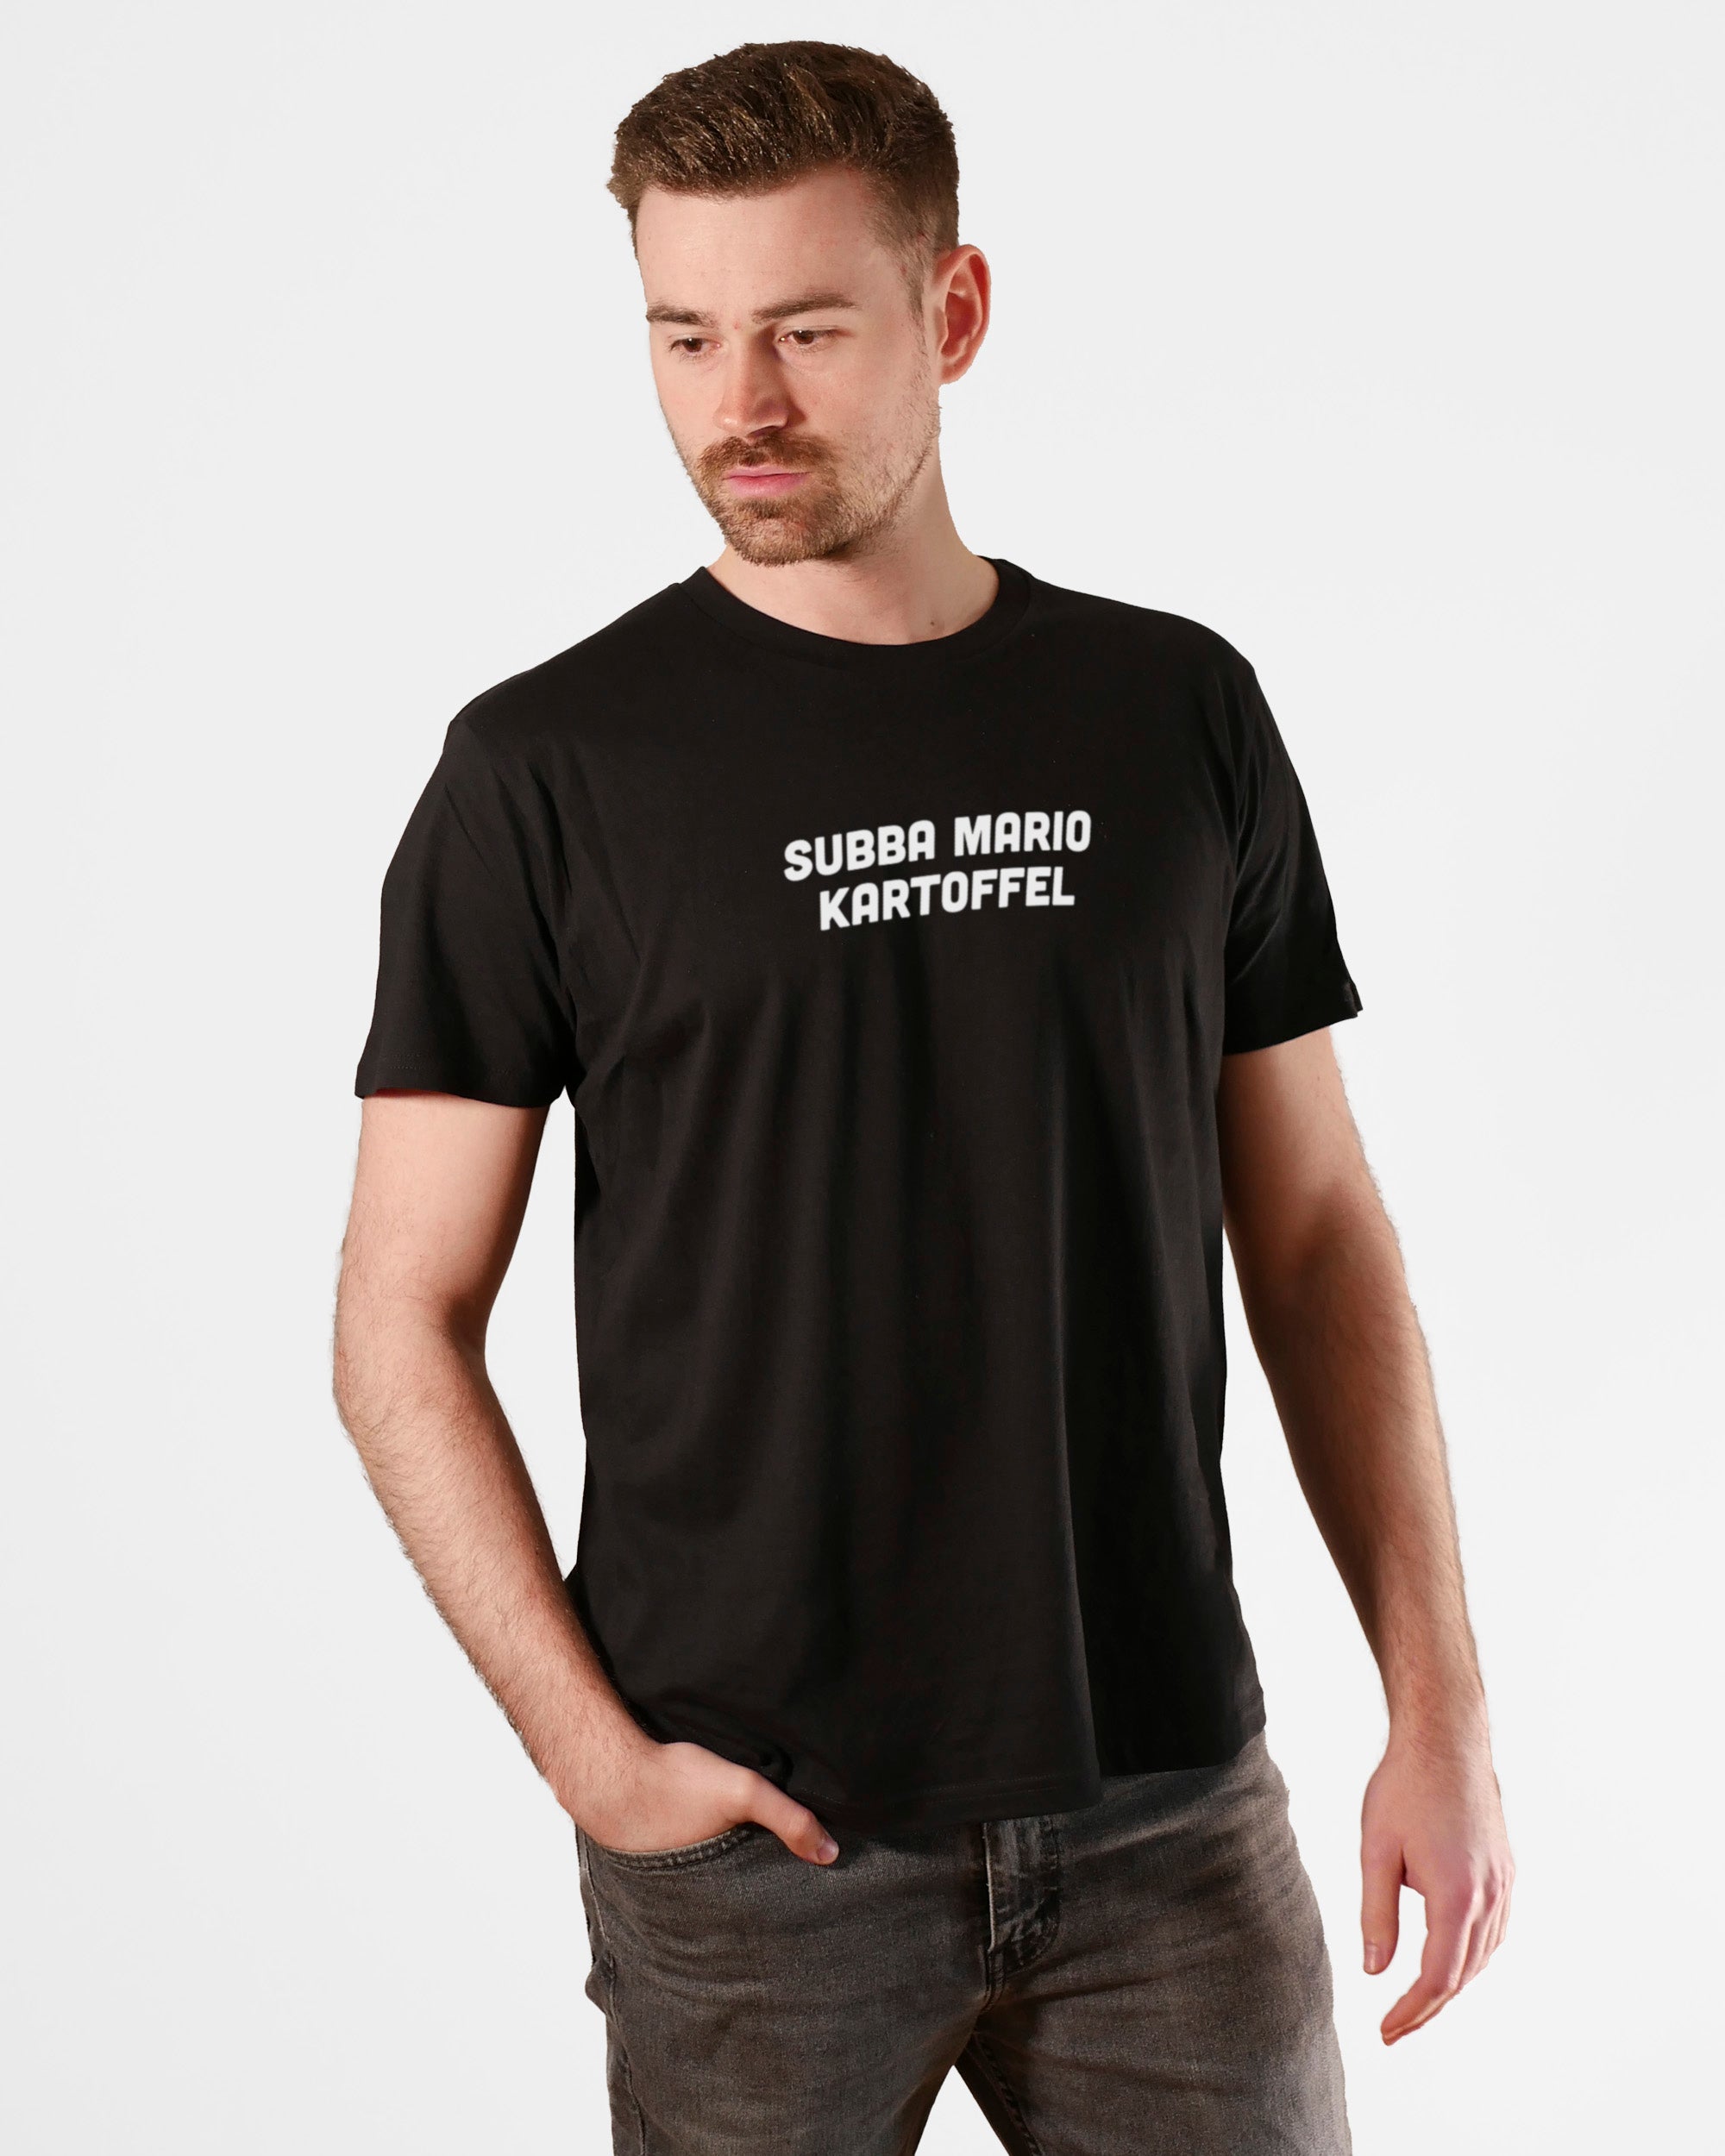 Subba Mario Kartoffel | 3-Style T-Shirt